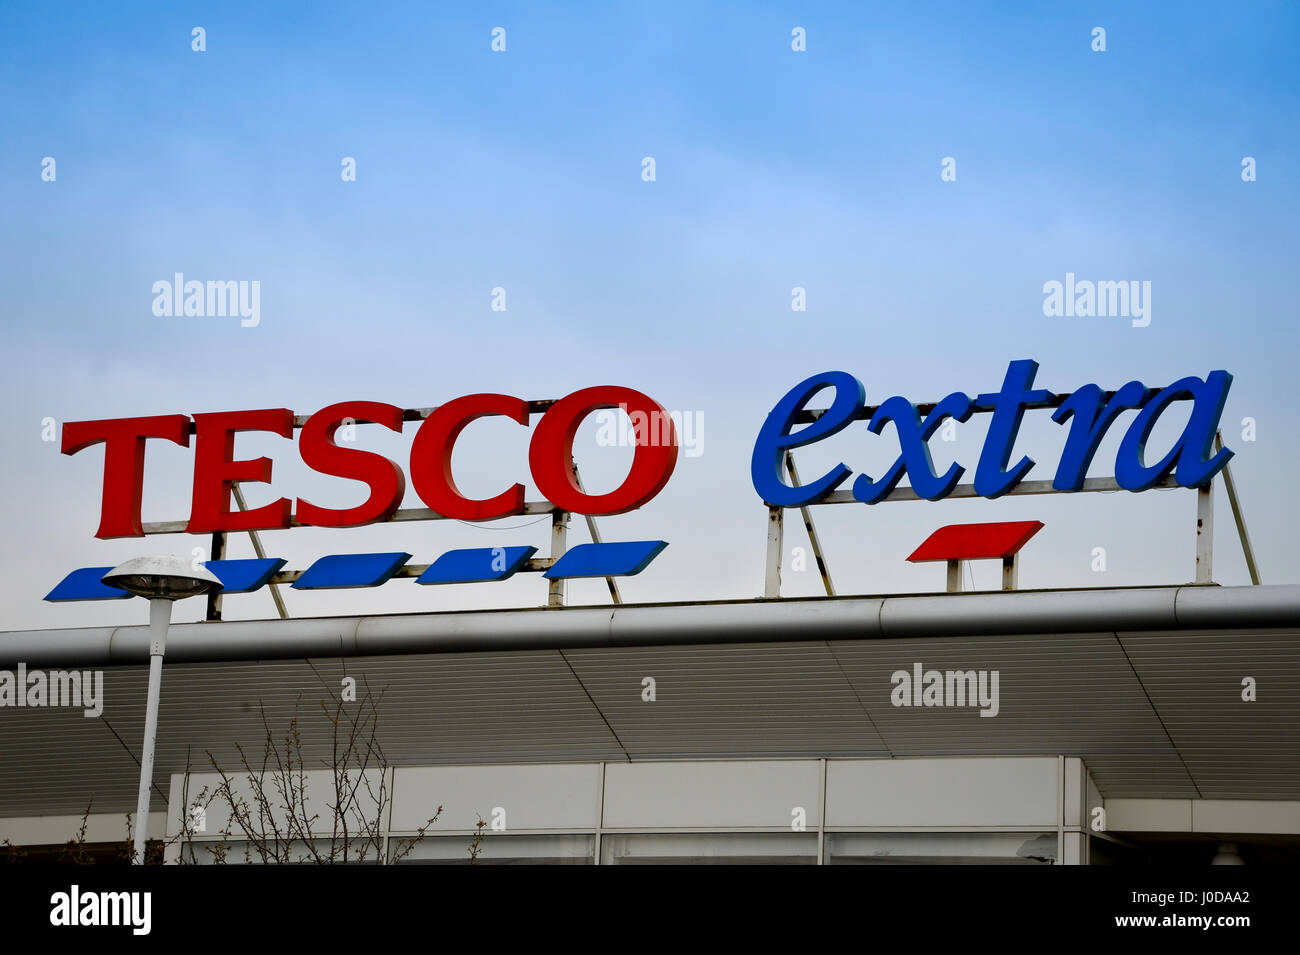 Tesco Extra supermarket sign Stock Photo